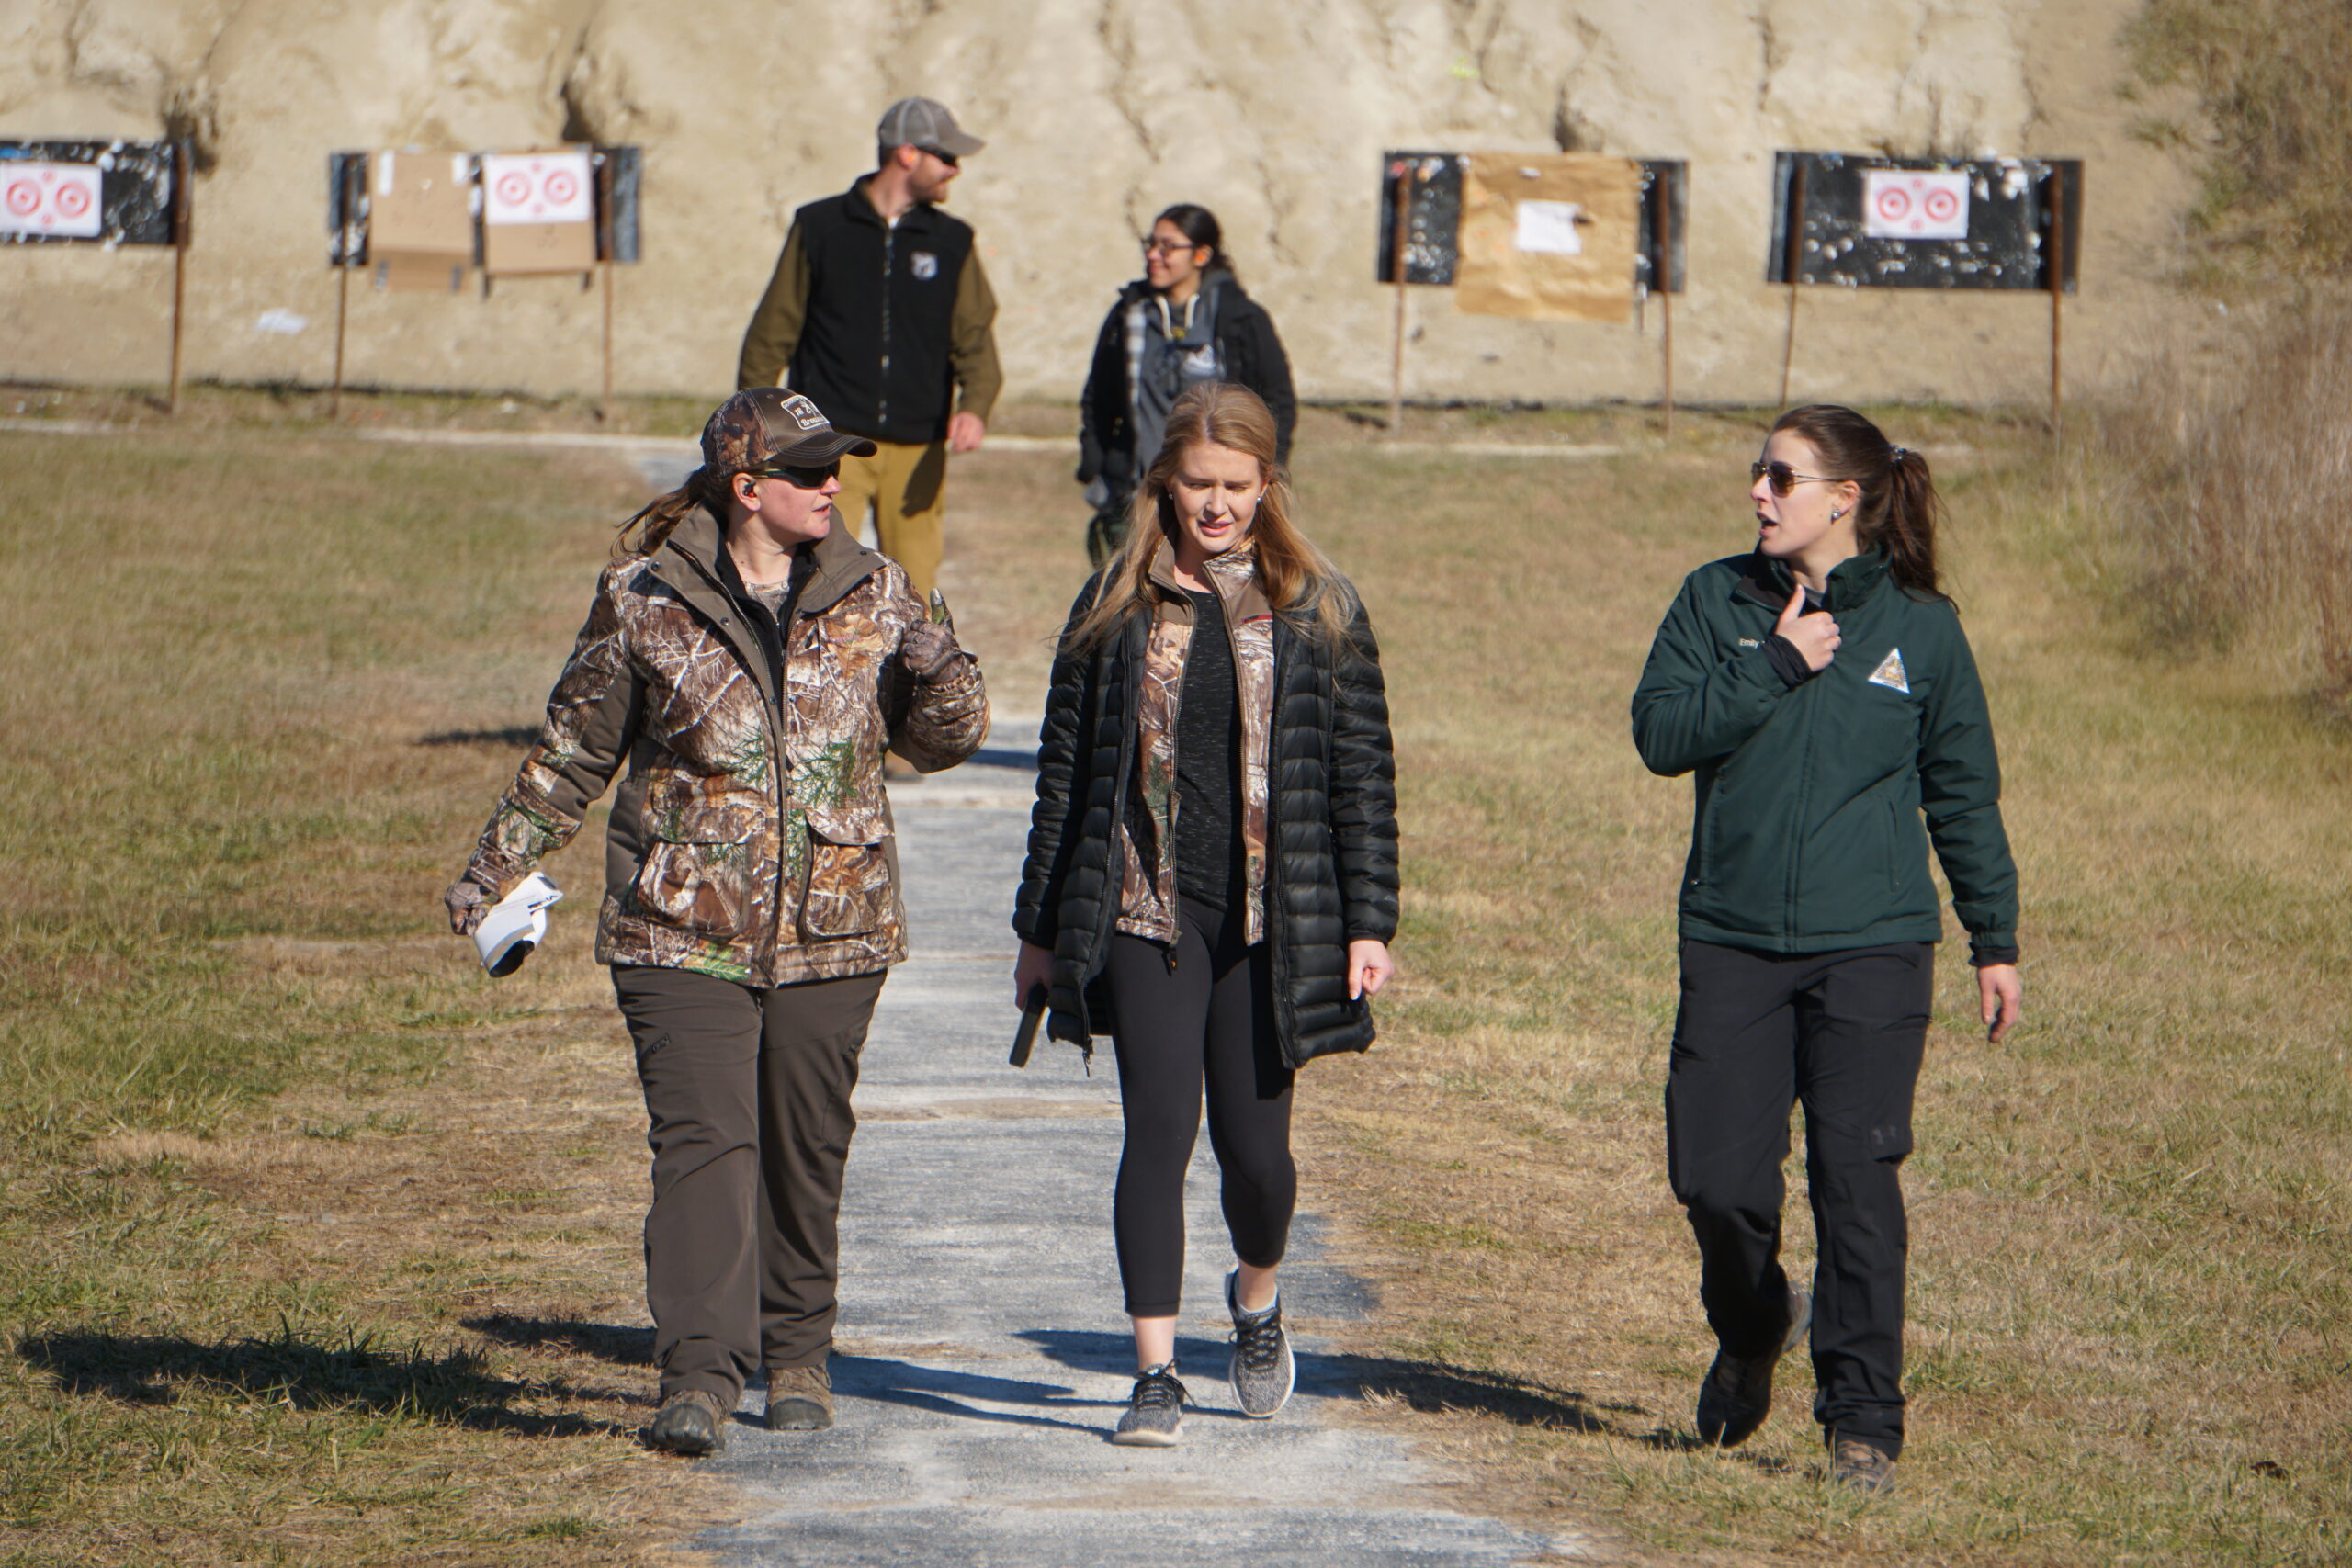 women retrieving targets at a public shooting range in missouri